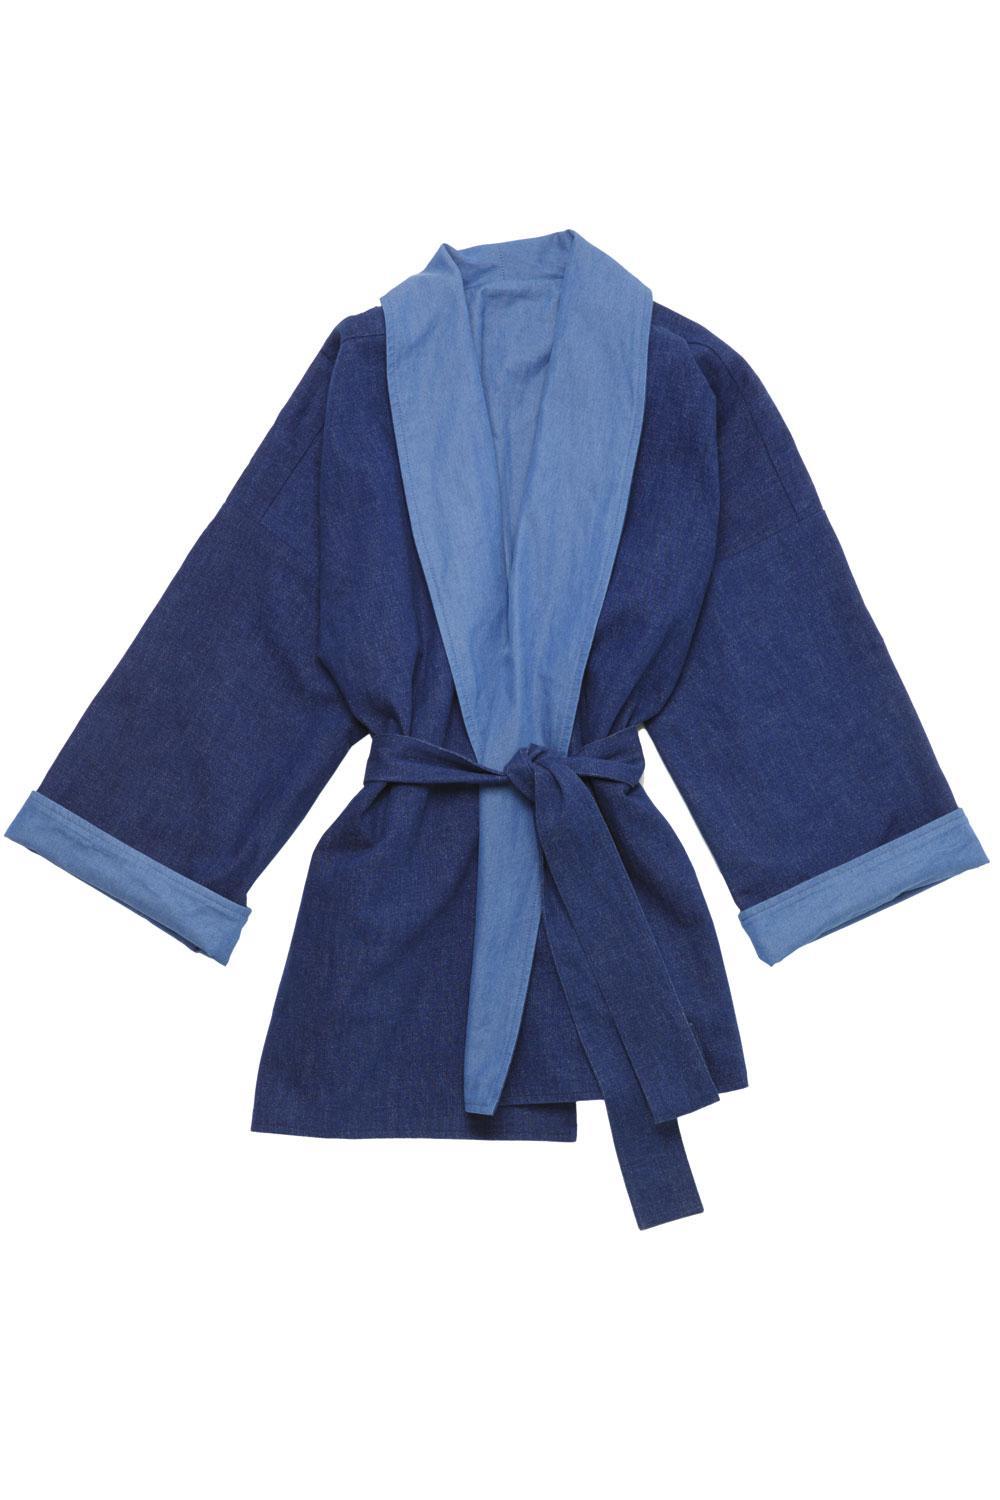 Kimono réversible Façon Jacmin, 280 euros.